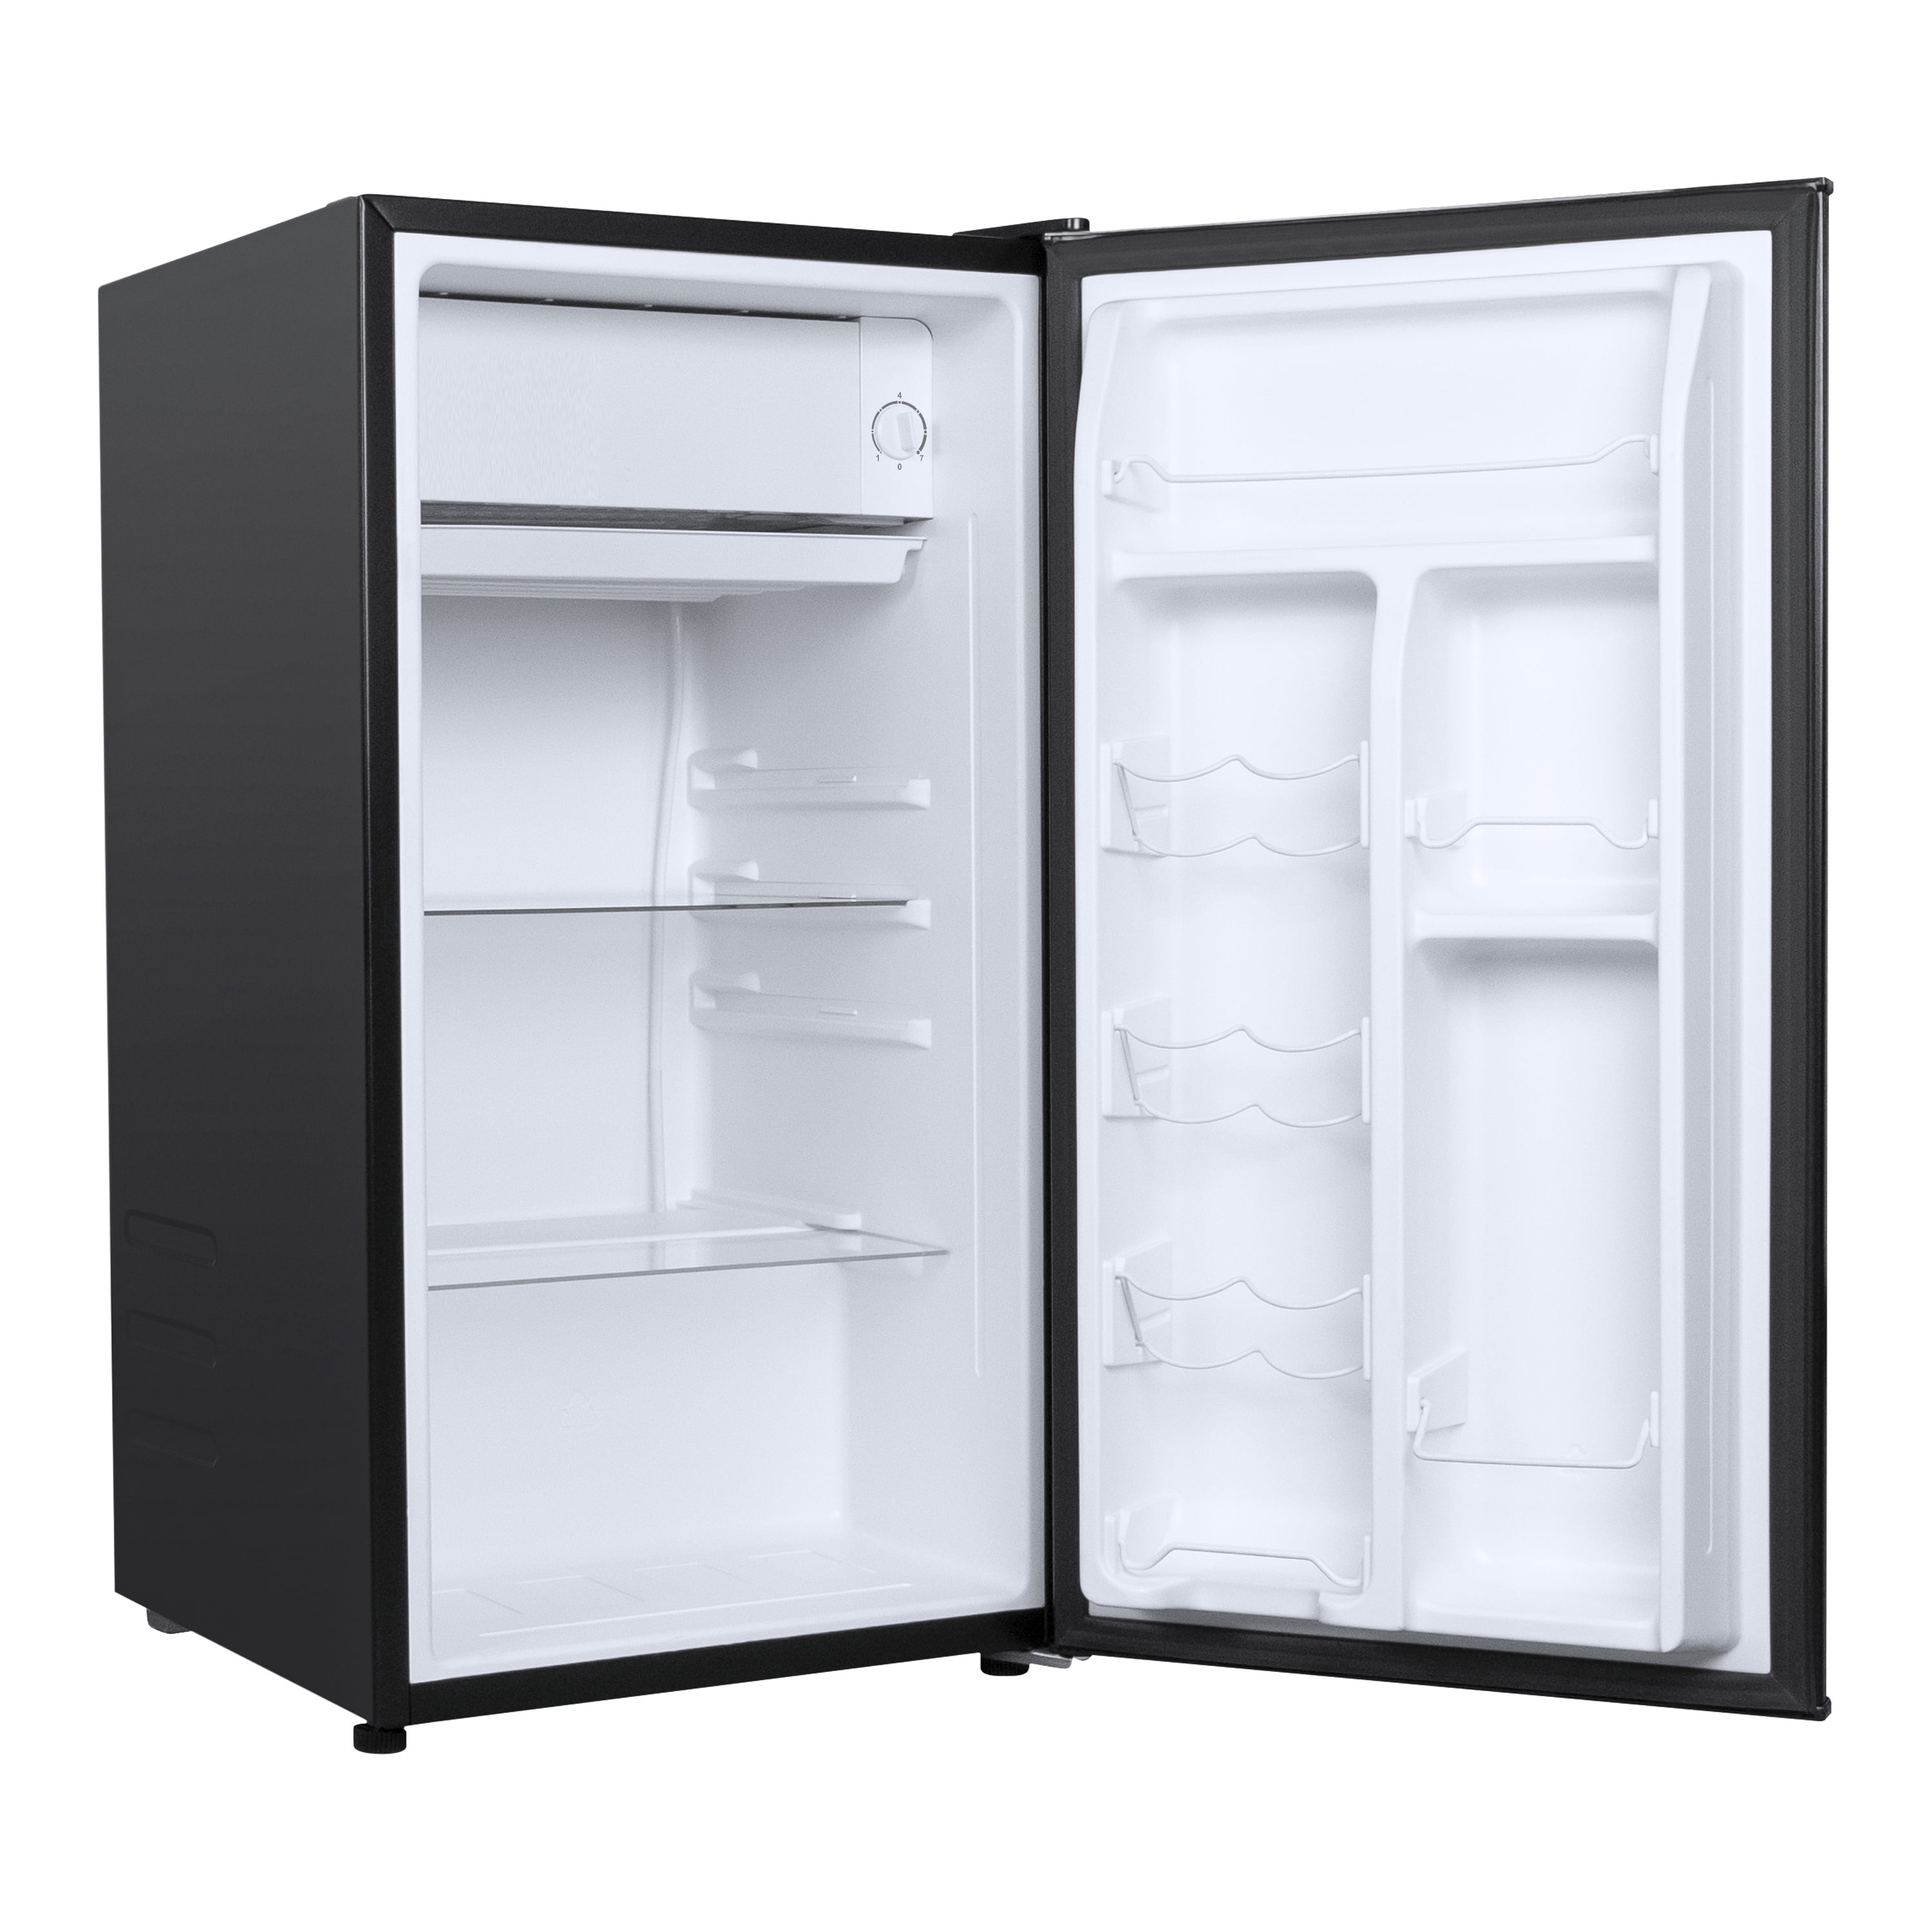 3.1 Cubic Feet Compact Refrigerator, Black - 86100